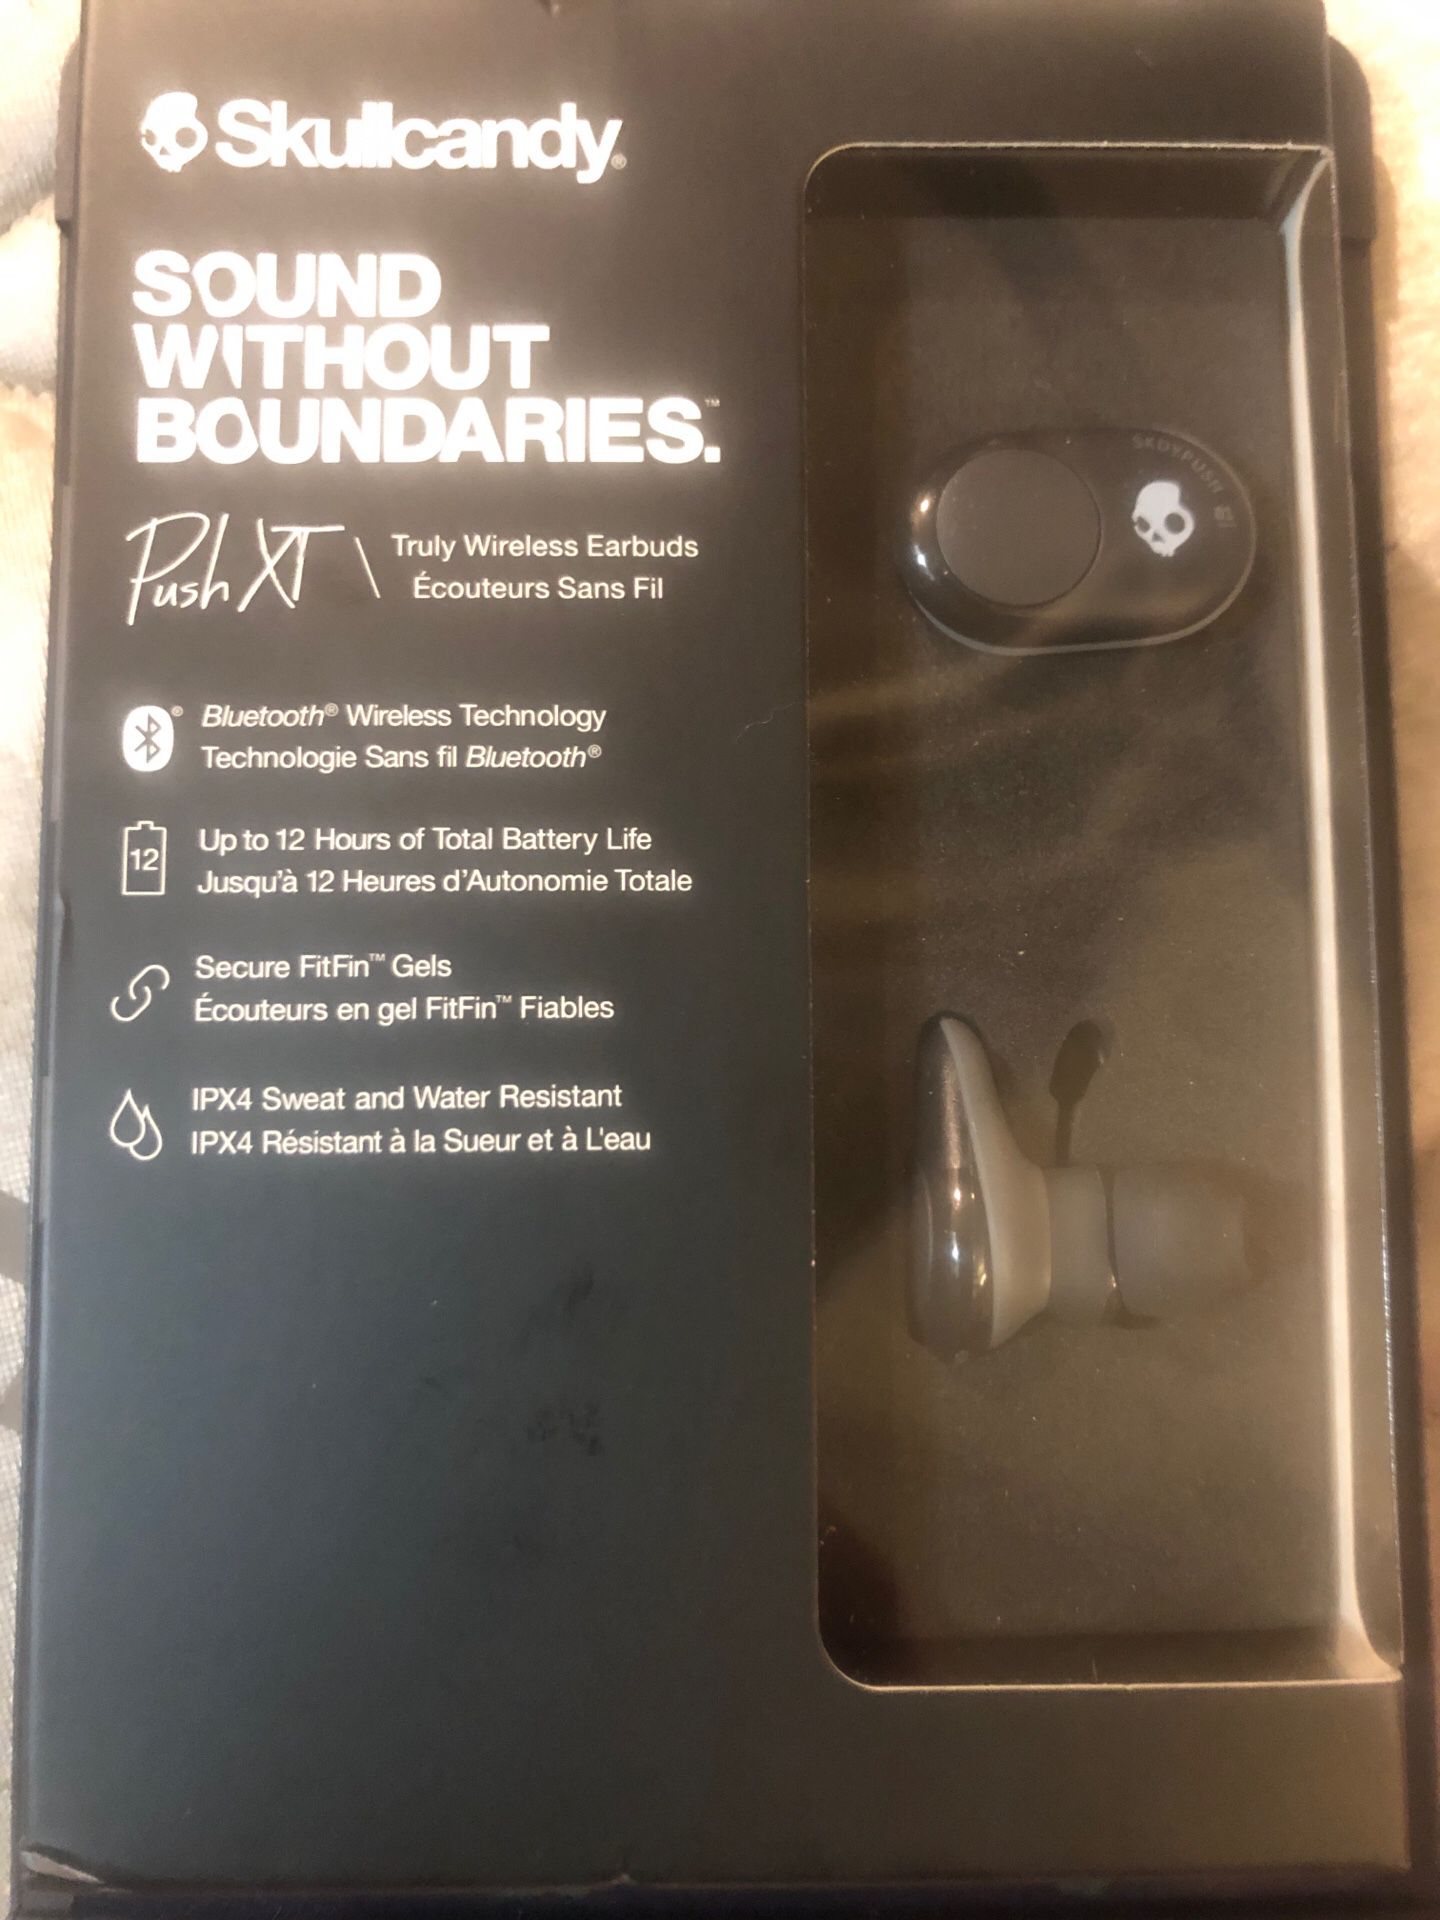 New Skullcandy Push XT wireless earbuds